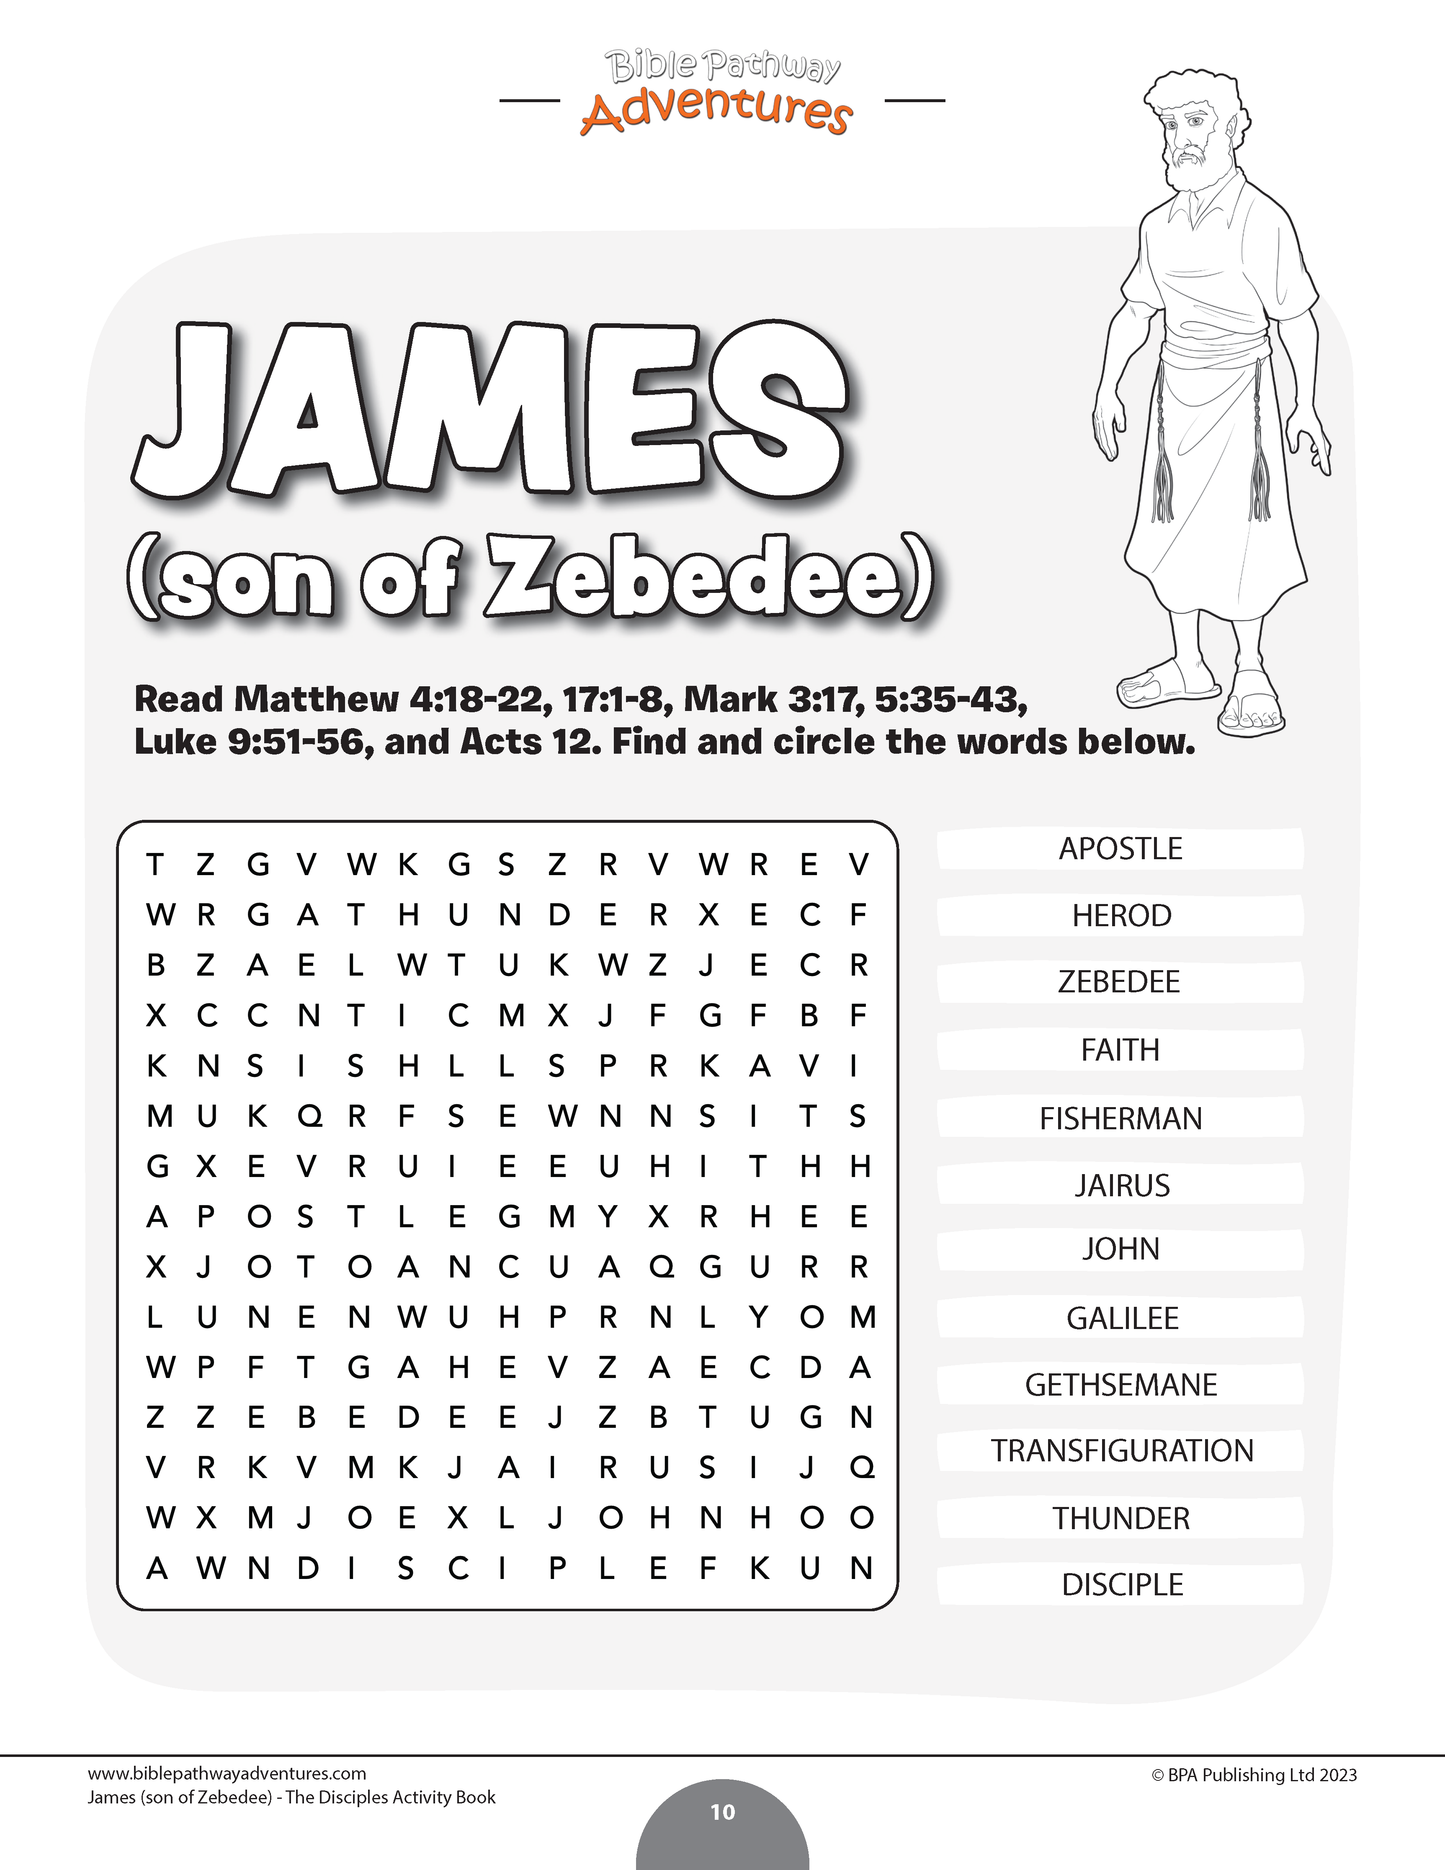 James (son of Zebedee): The Disciple Activity Book (PDF)